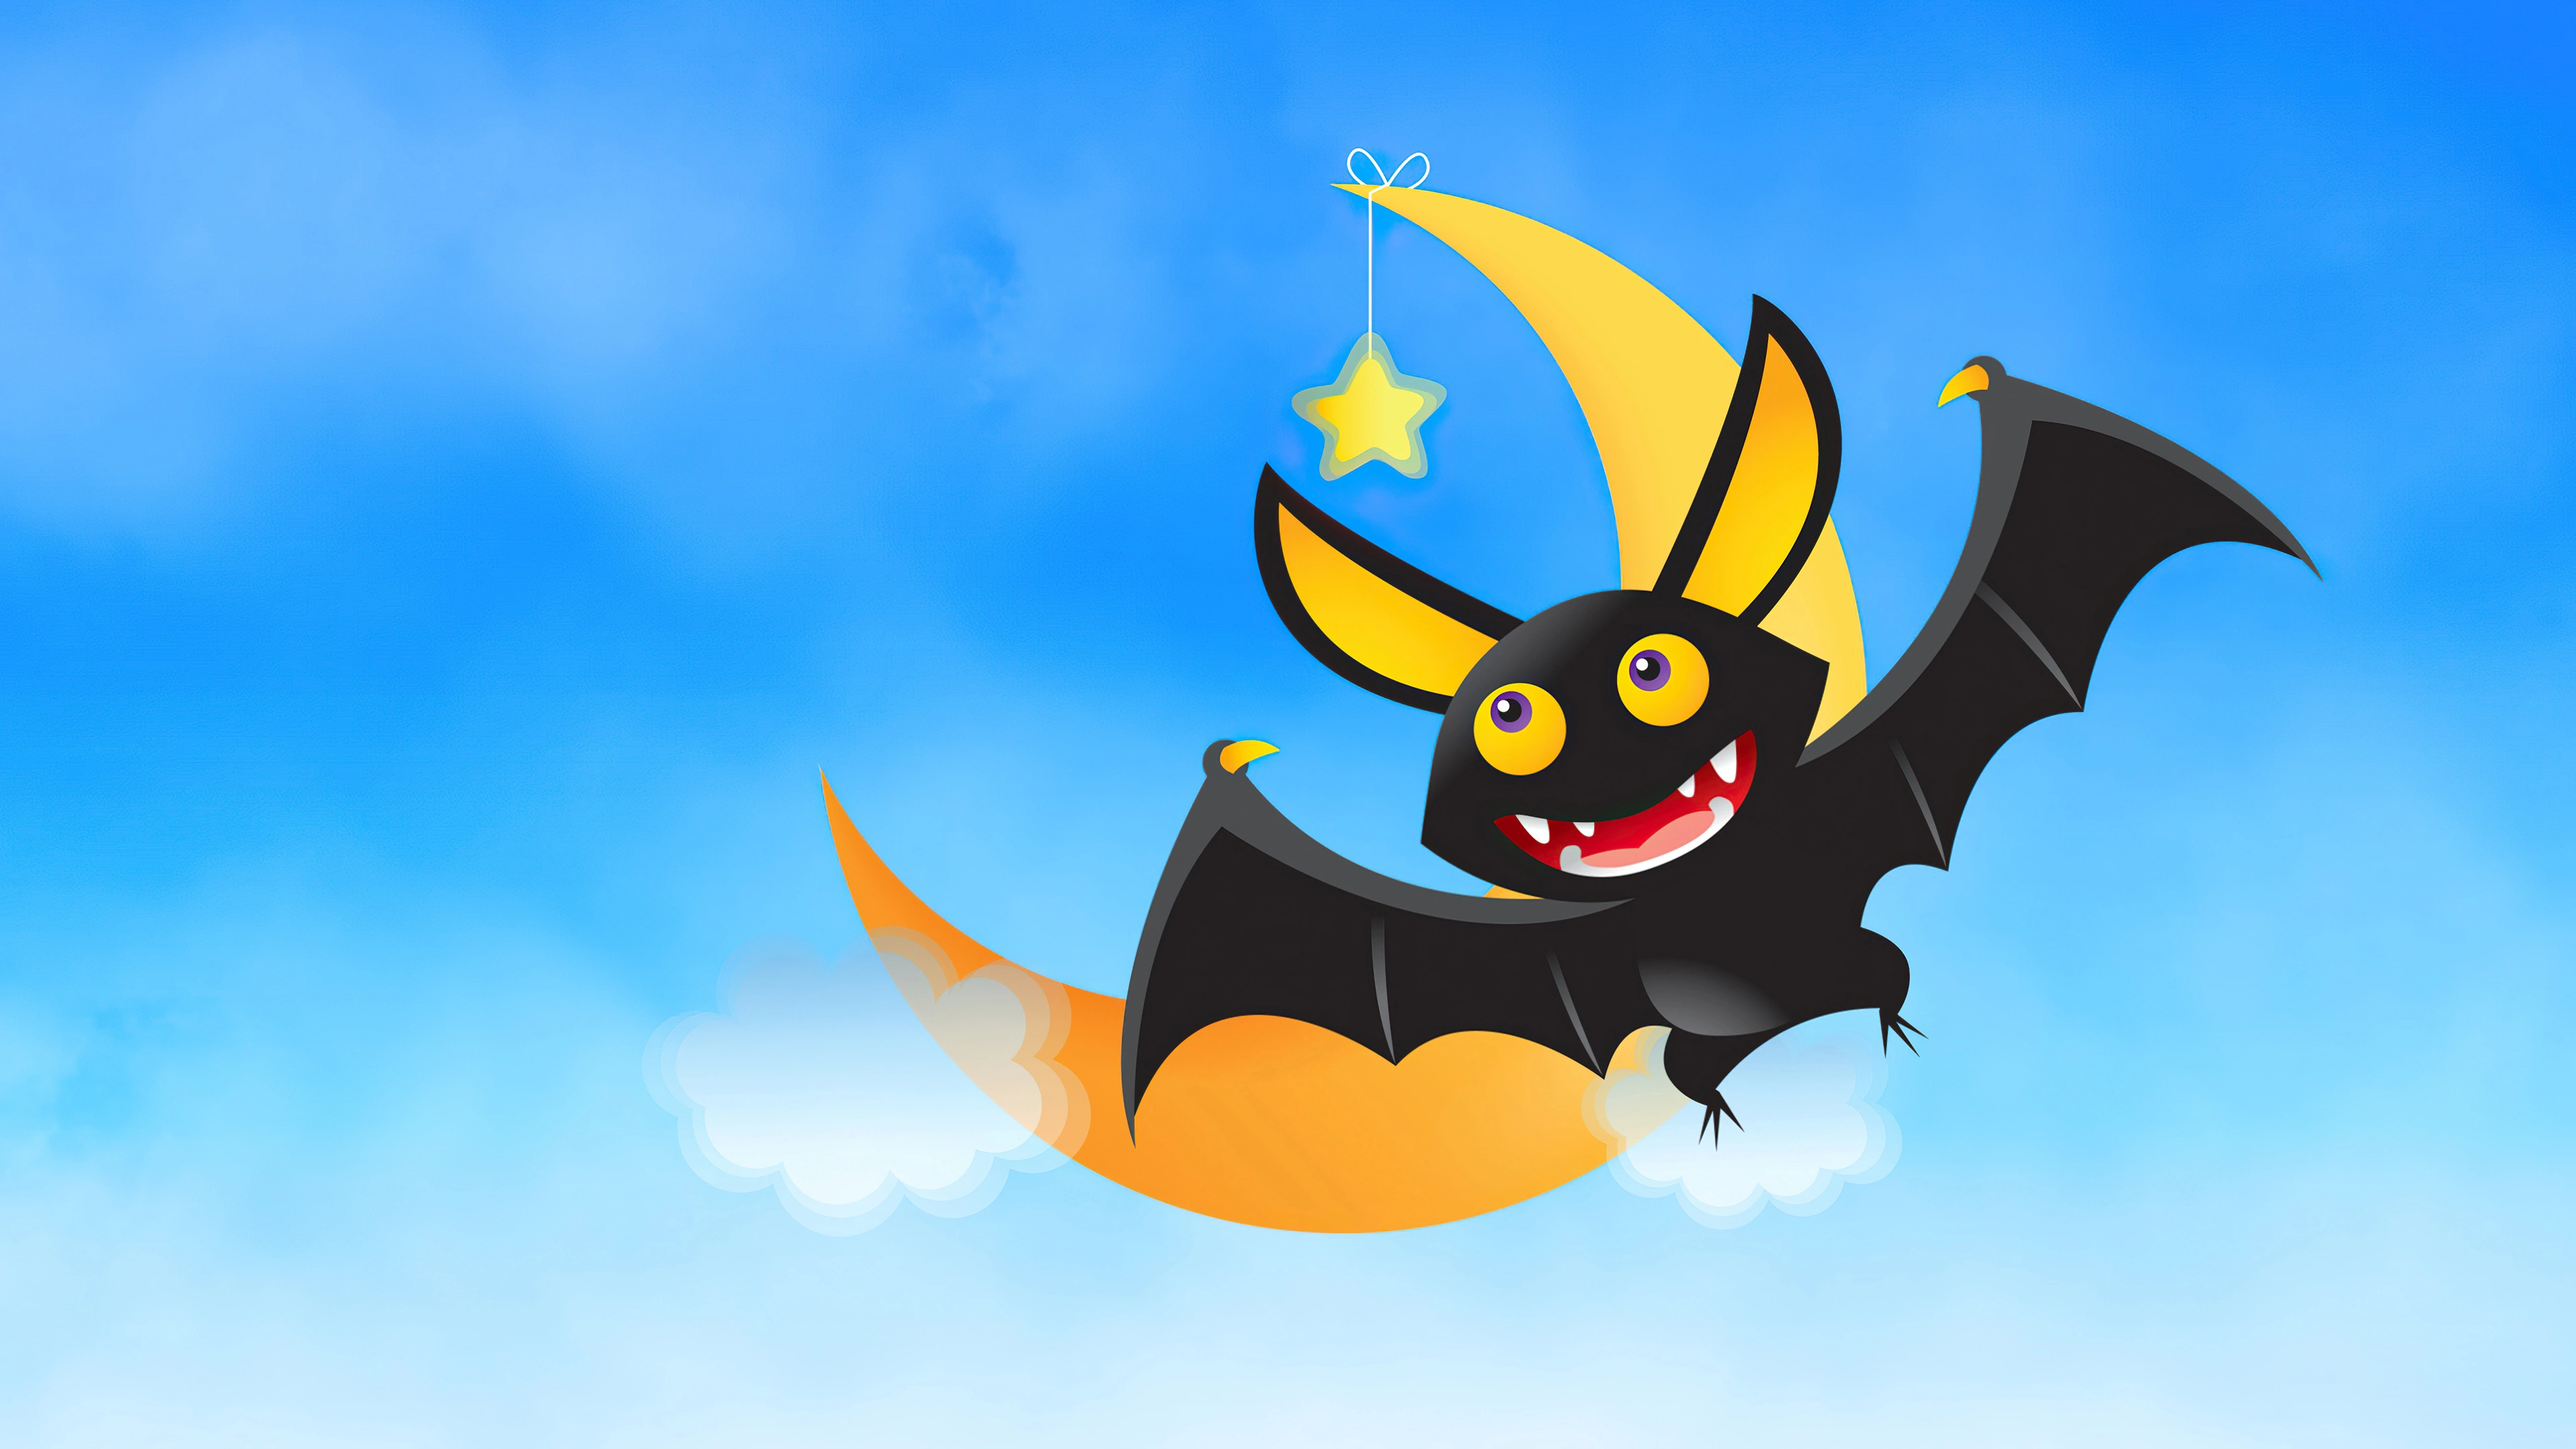 bat cute illustration or.jpg